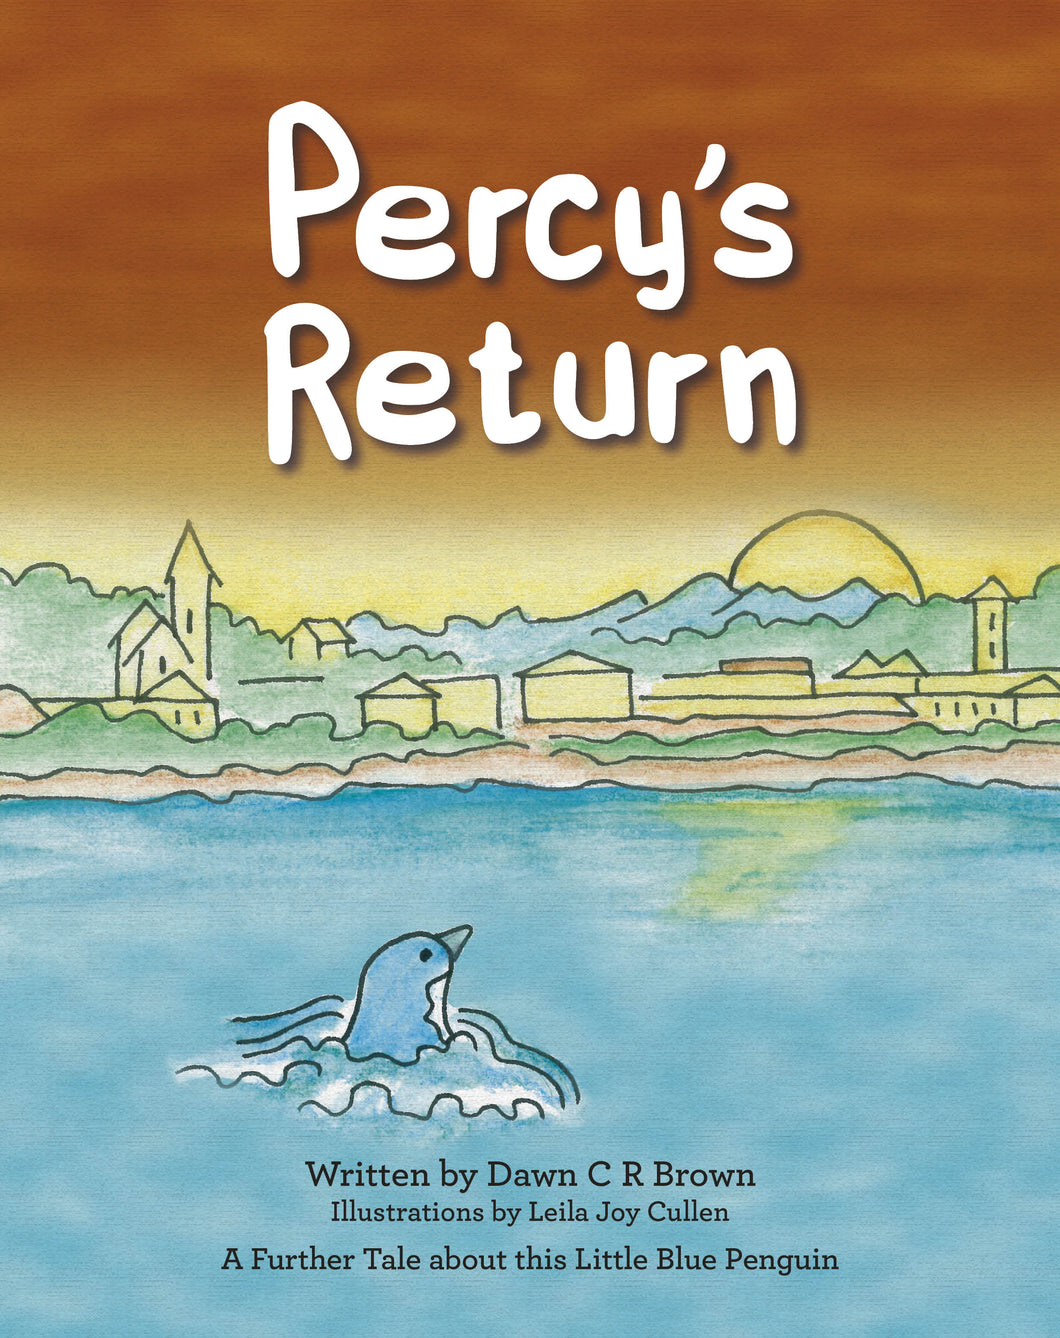 Percy's Return Book True story